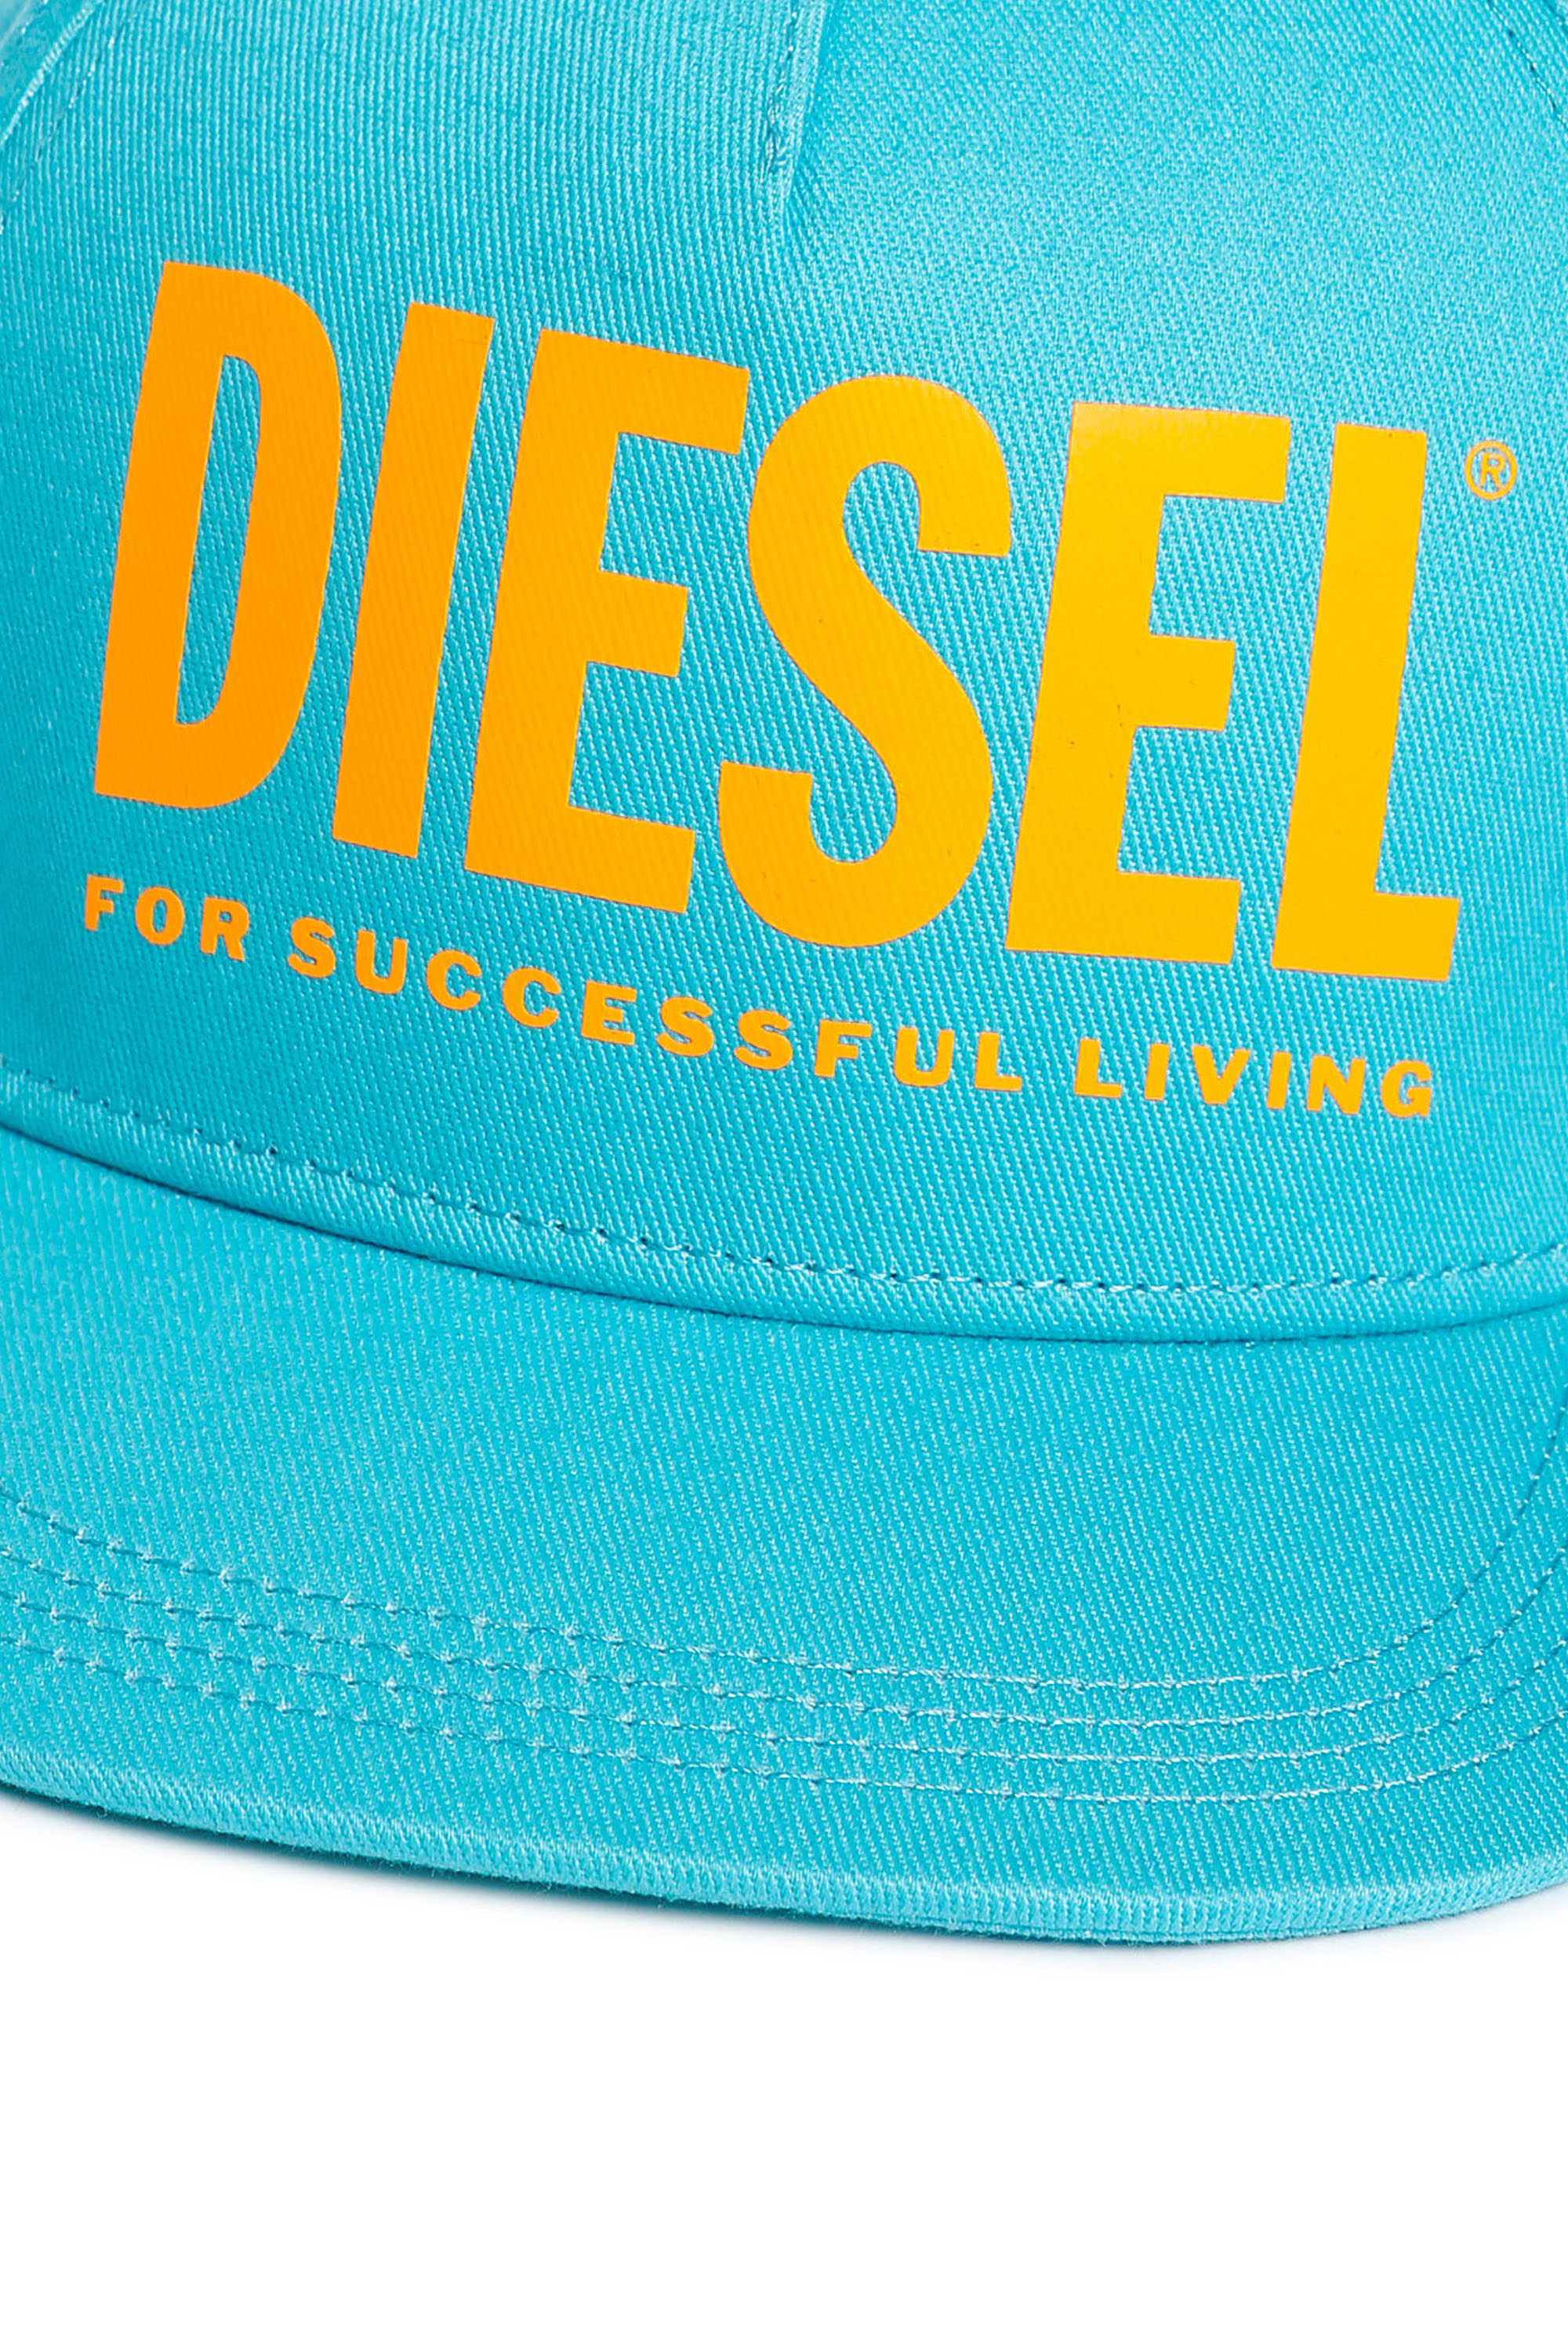 Diesel - FOLLY, Water Green - Image 3